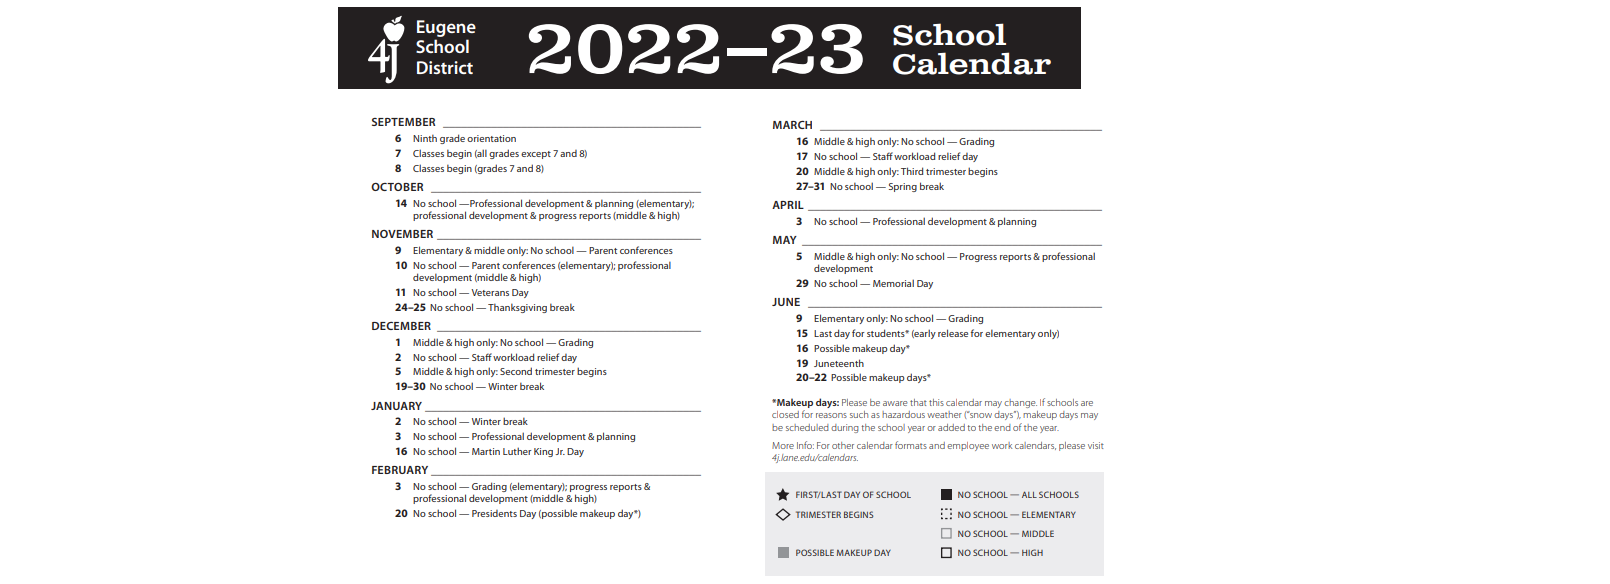 District School Academic Calendar Key for Mccornack Elementary School